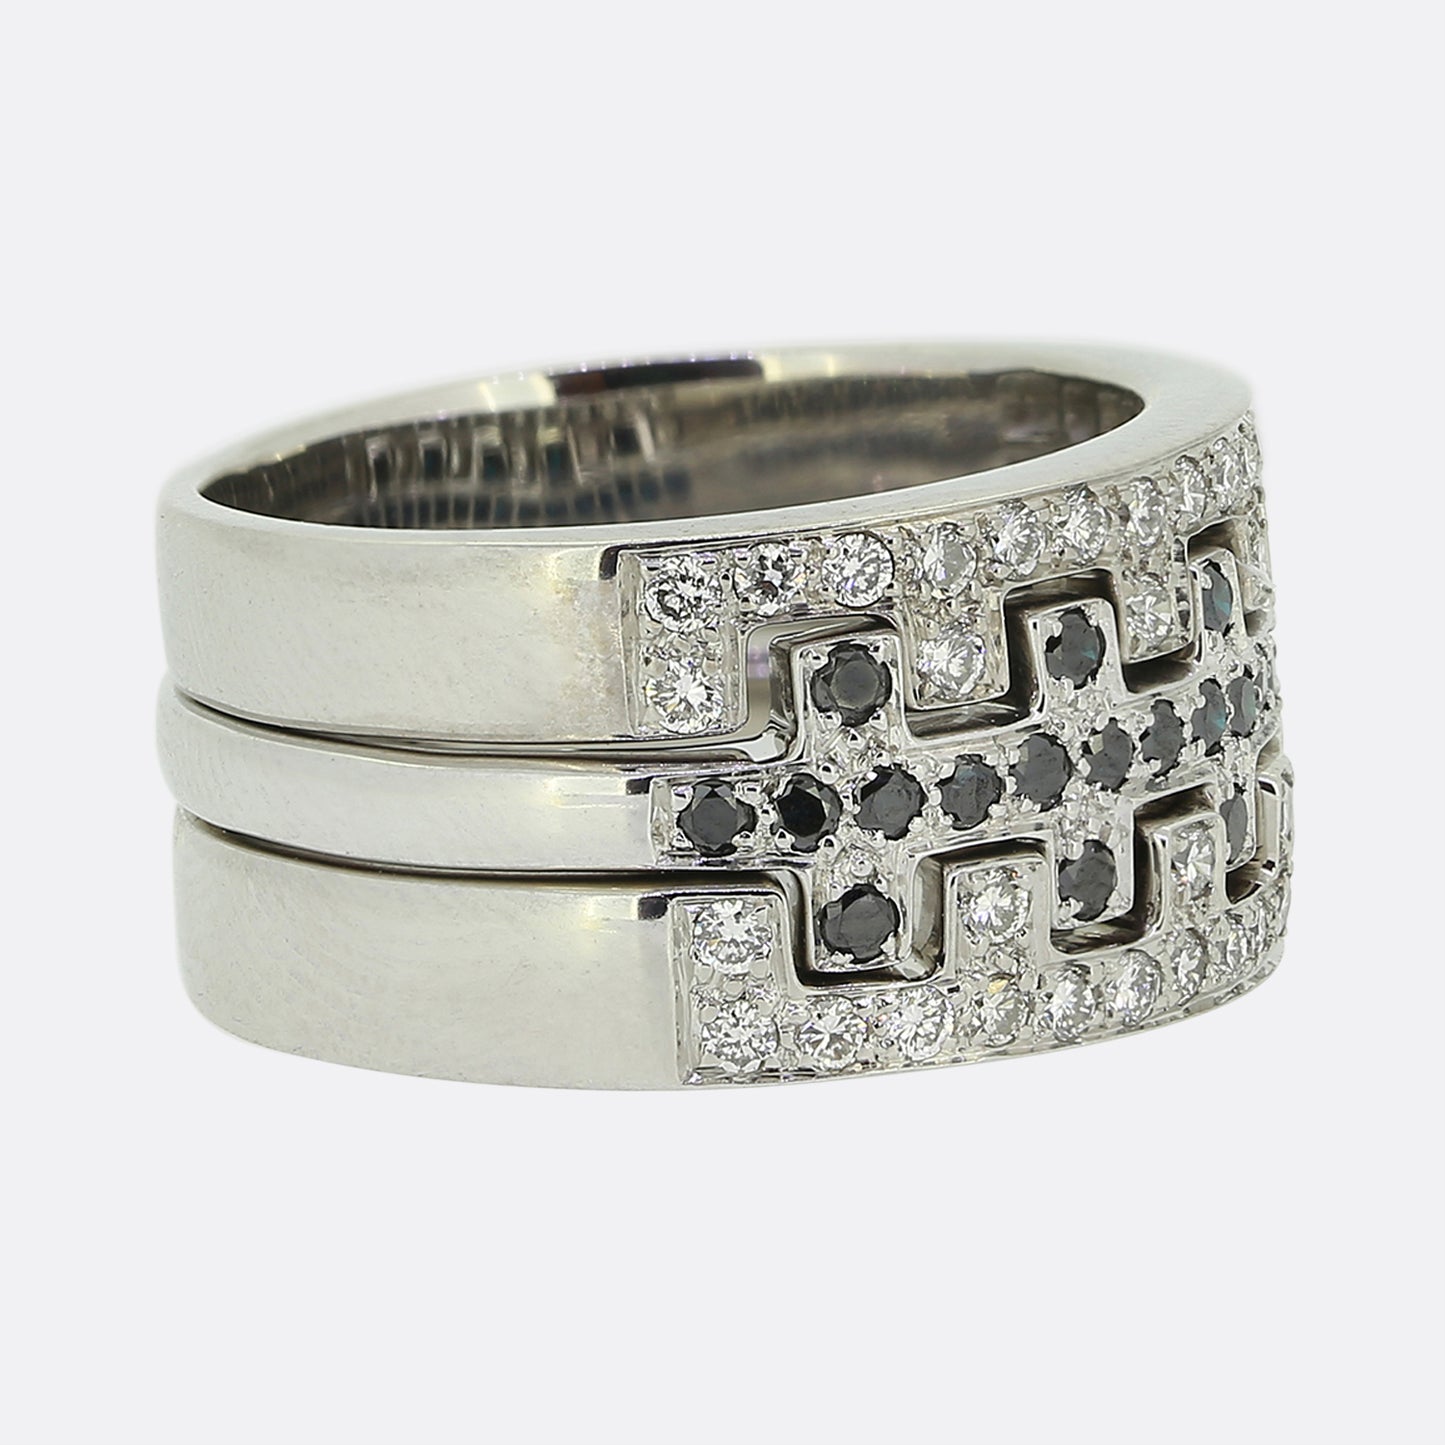 Vintage Black and White Diamond Interlocking Ring